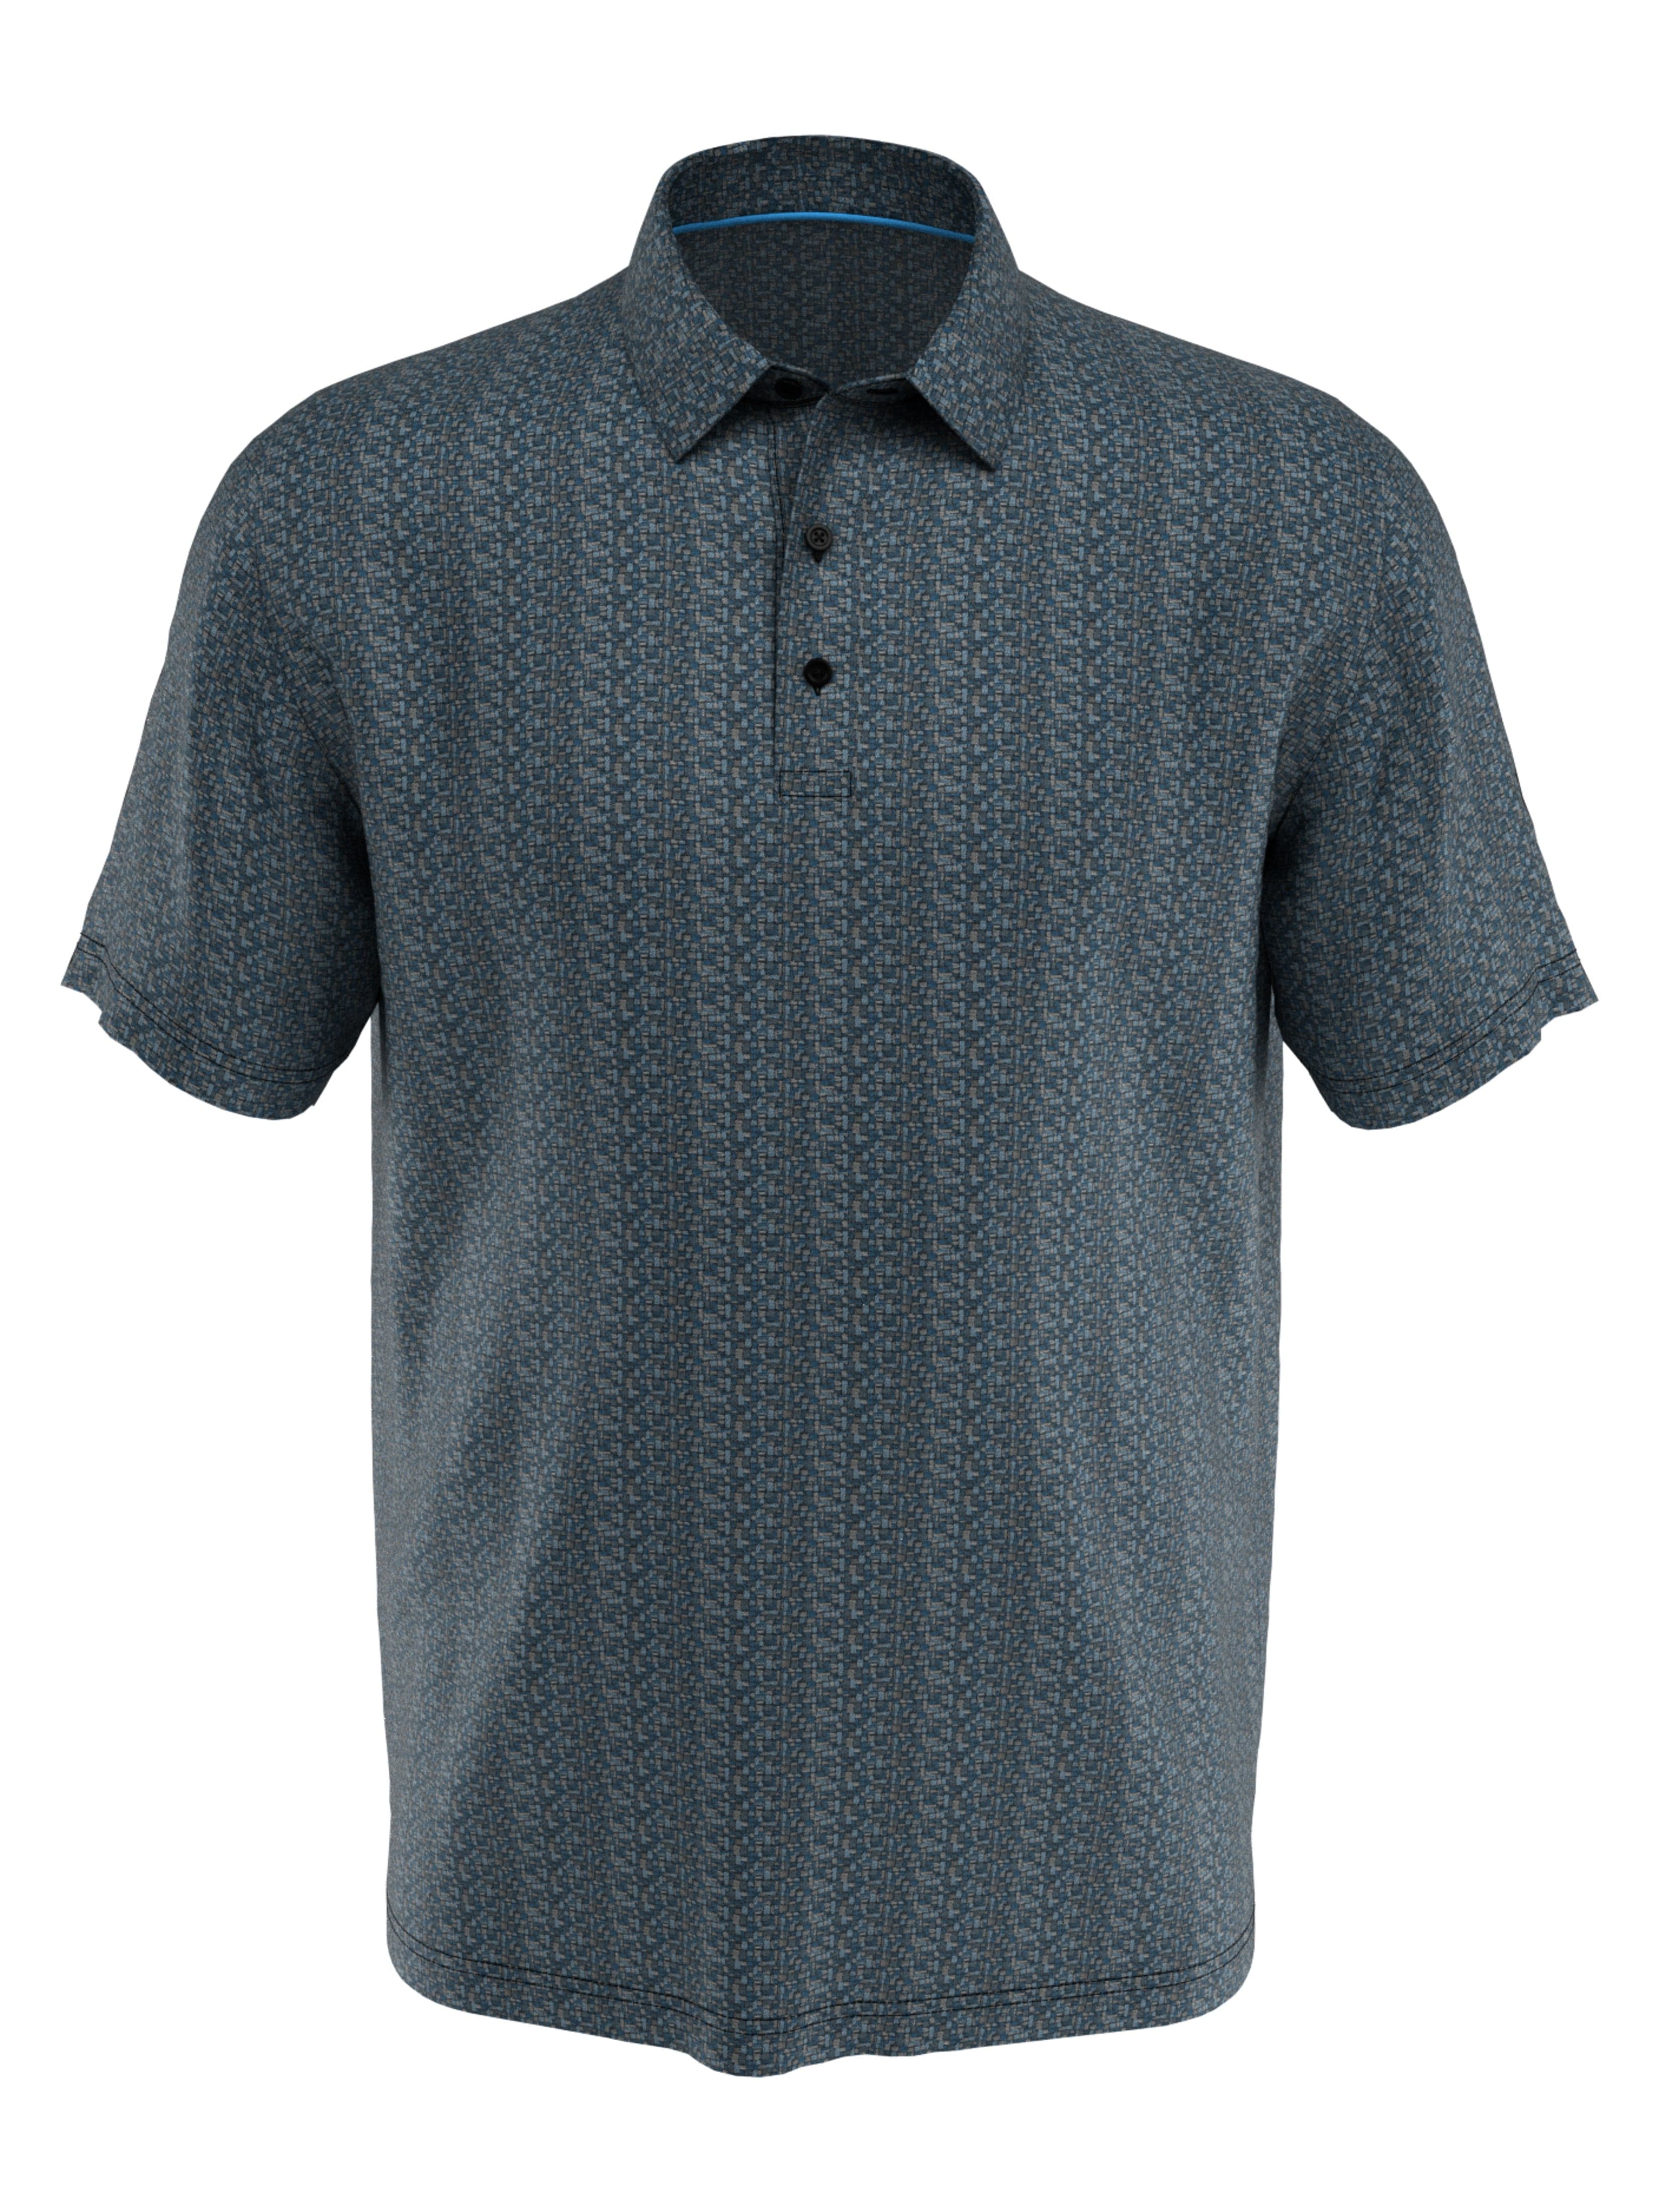 Callaway Apparel Mens Big & Tall Glitched Oxford Print Golf Polo Shirt, Size LT, Black, Polyester/Cotton/Elastane | Golf Apparel Shop